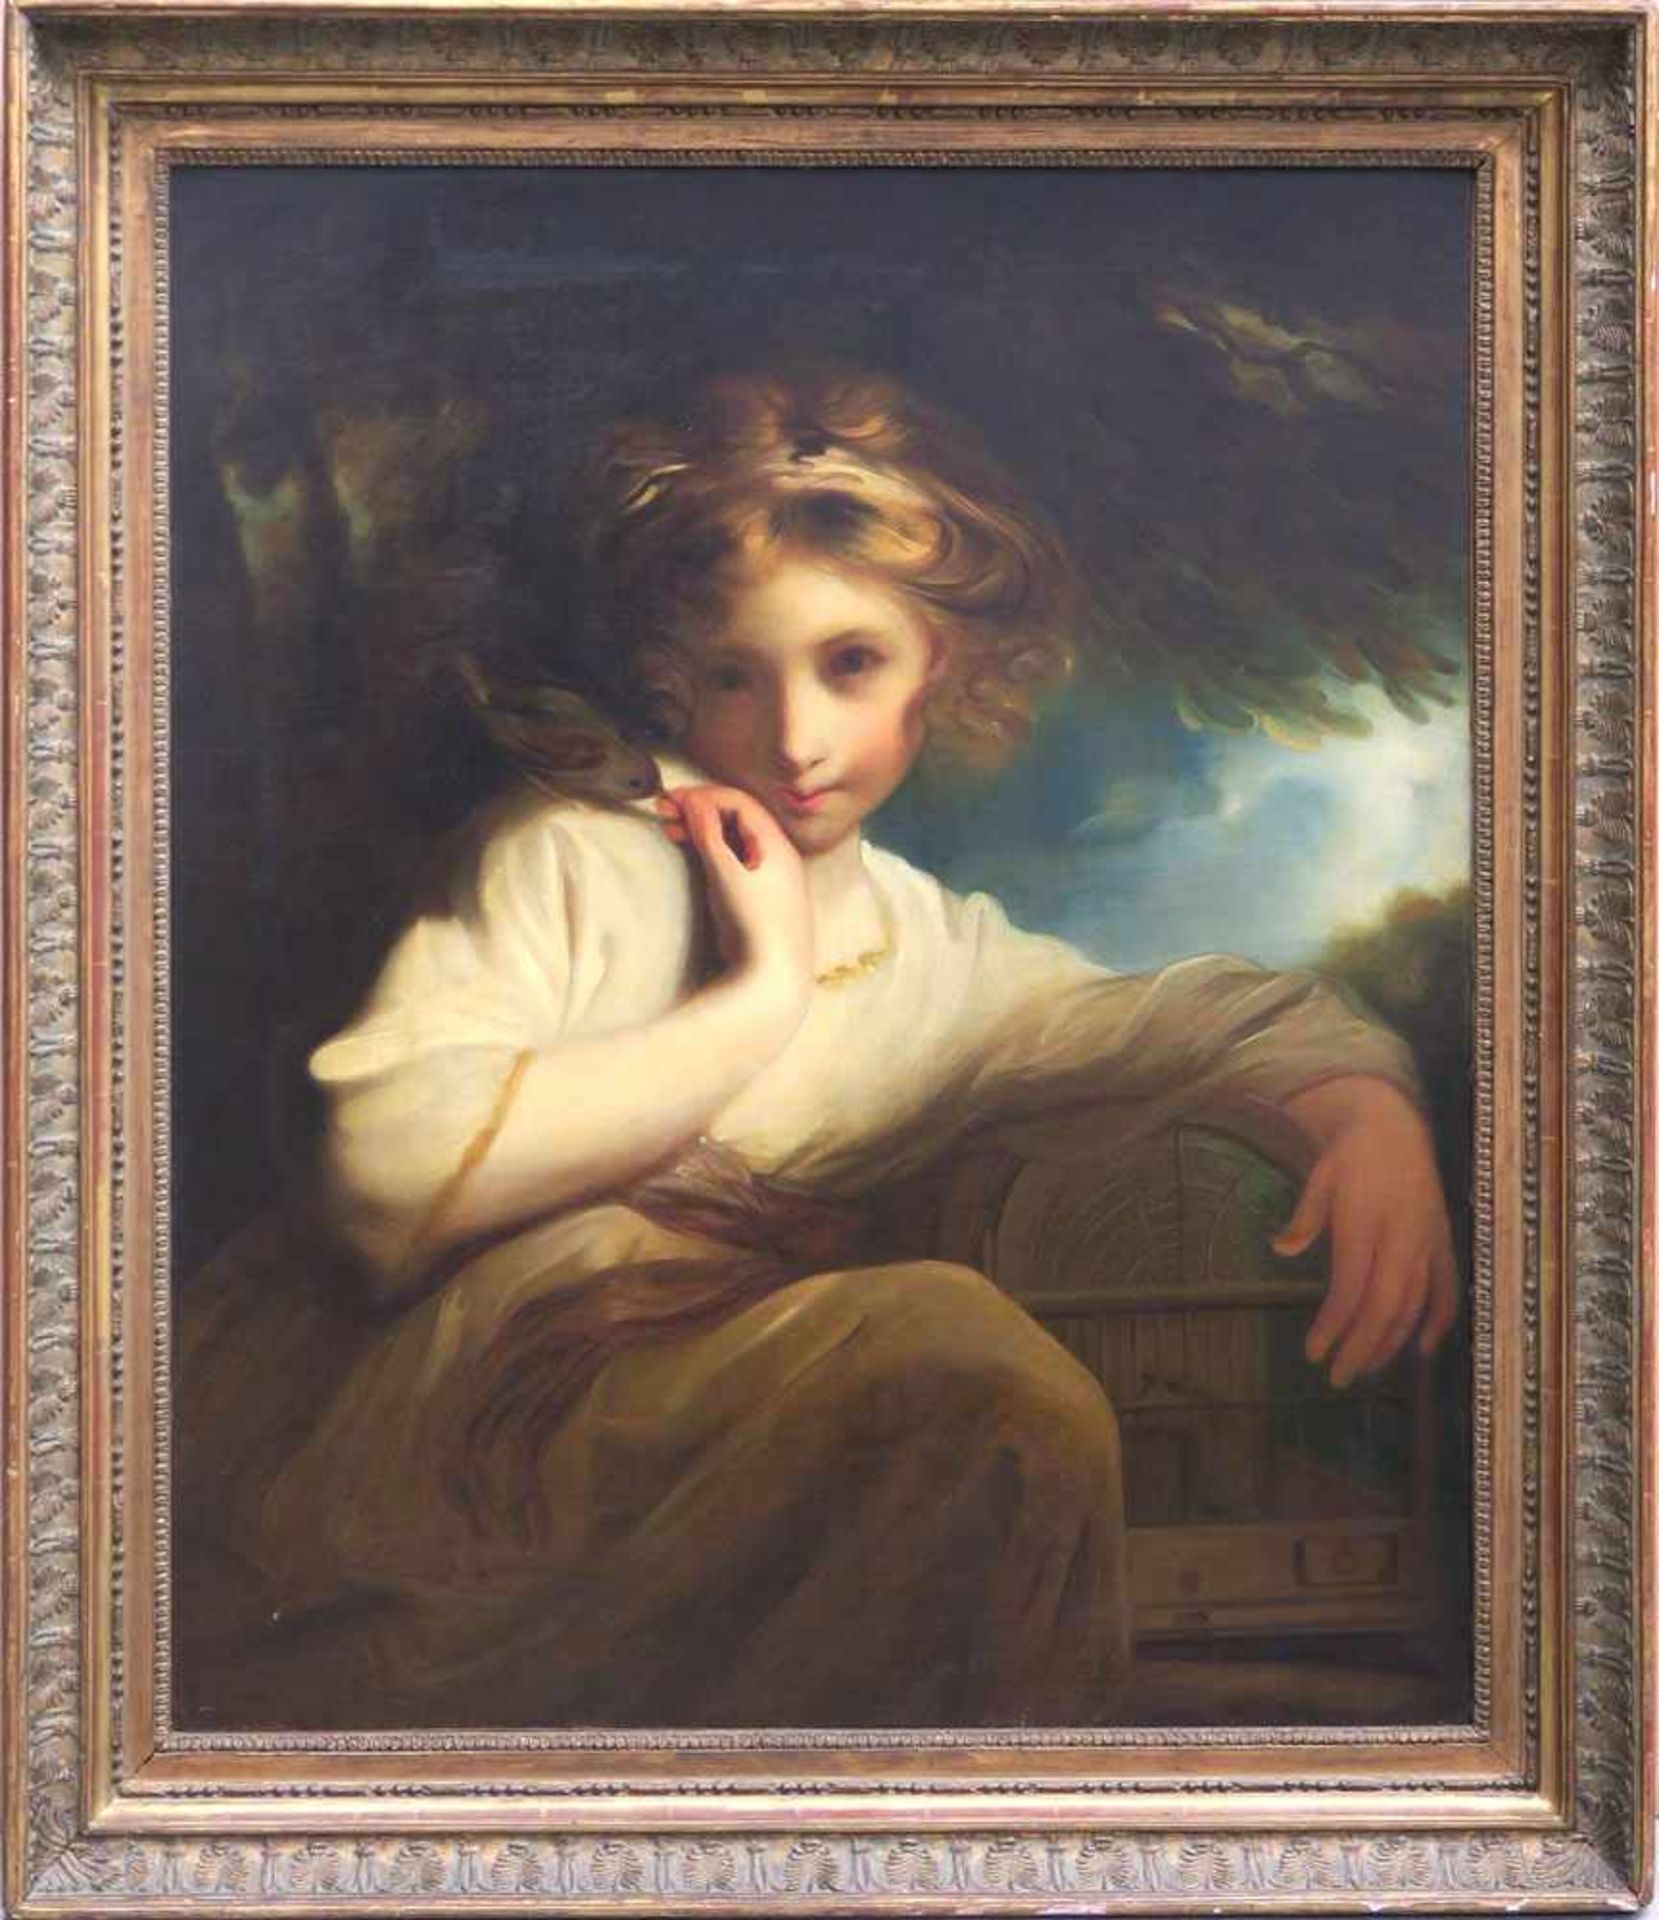 Kopie nach Sir Joshua Reynoldswohl 19. Jh.LesbiaÖl/Lwd. 77 x 65 cm. Doubliert, rest. Rahmen.- - -